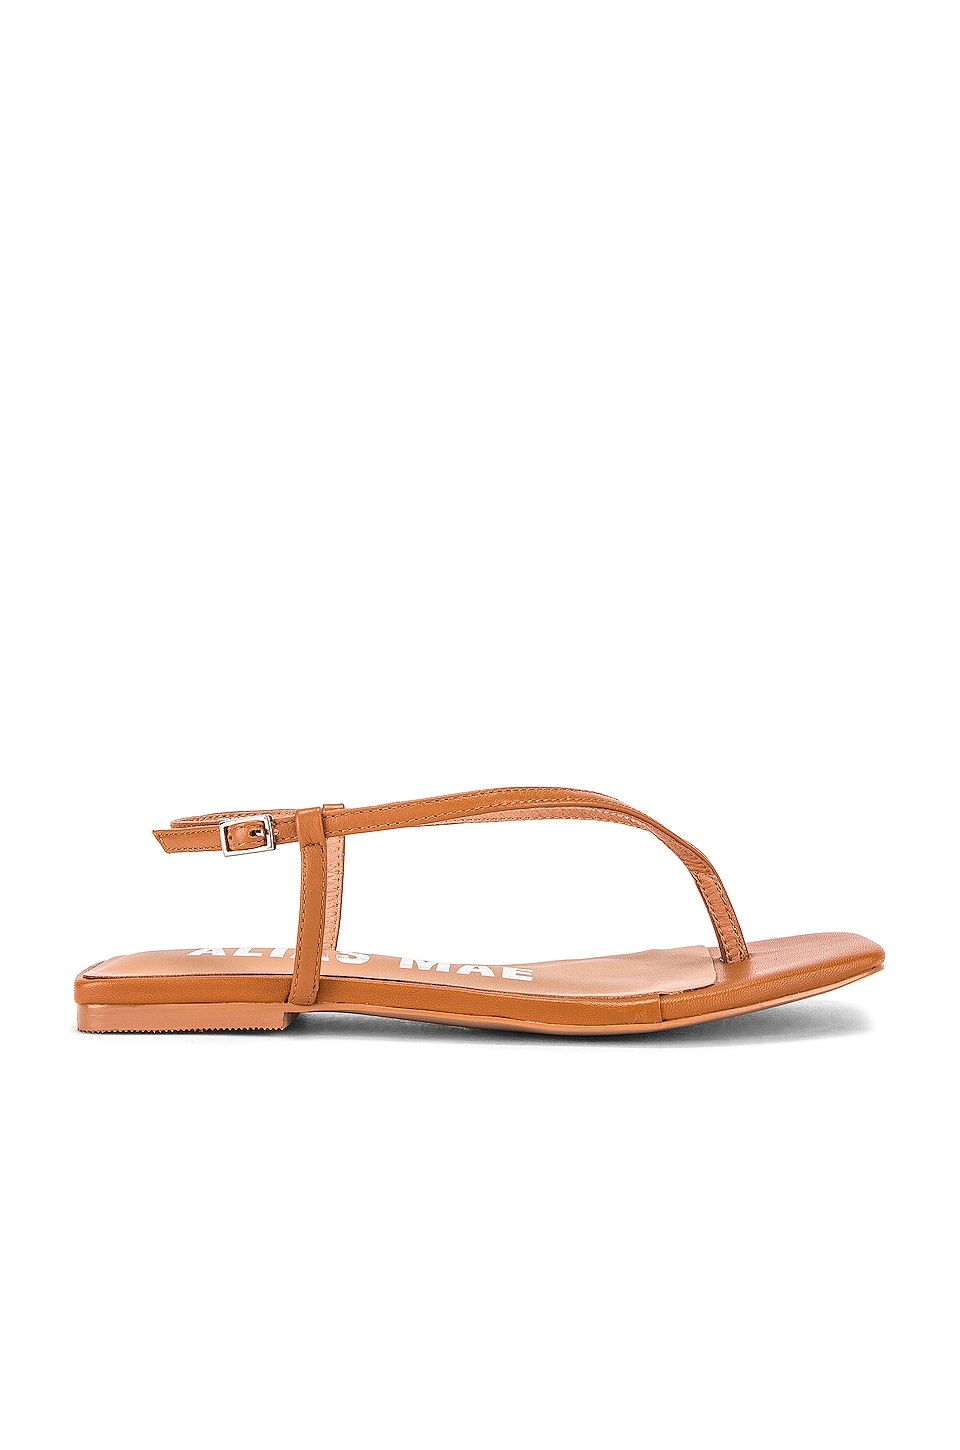 Alias Mae Andie Sandal in Tan Leather | REVOLVE